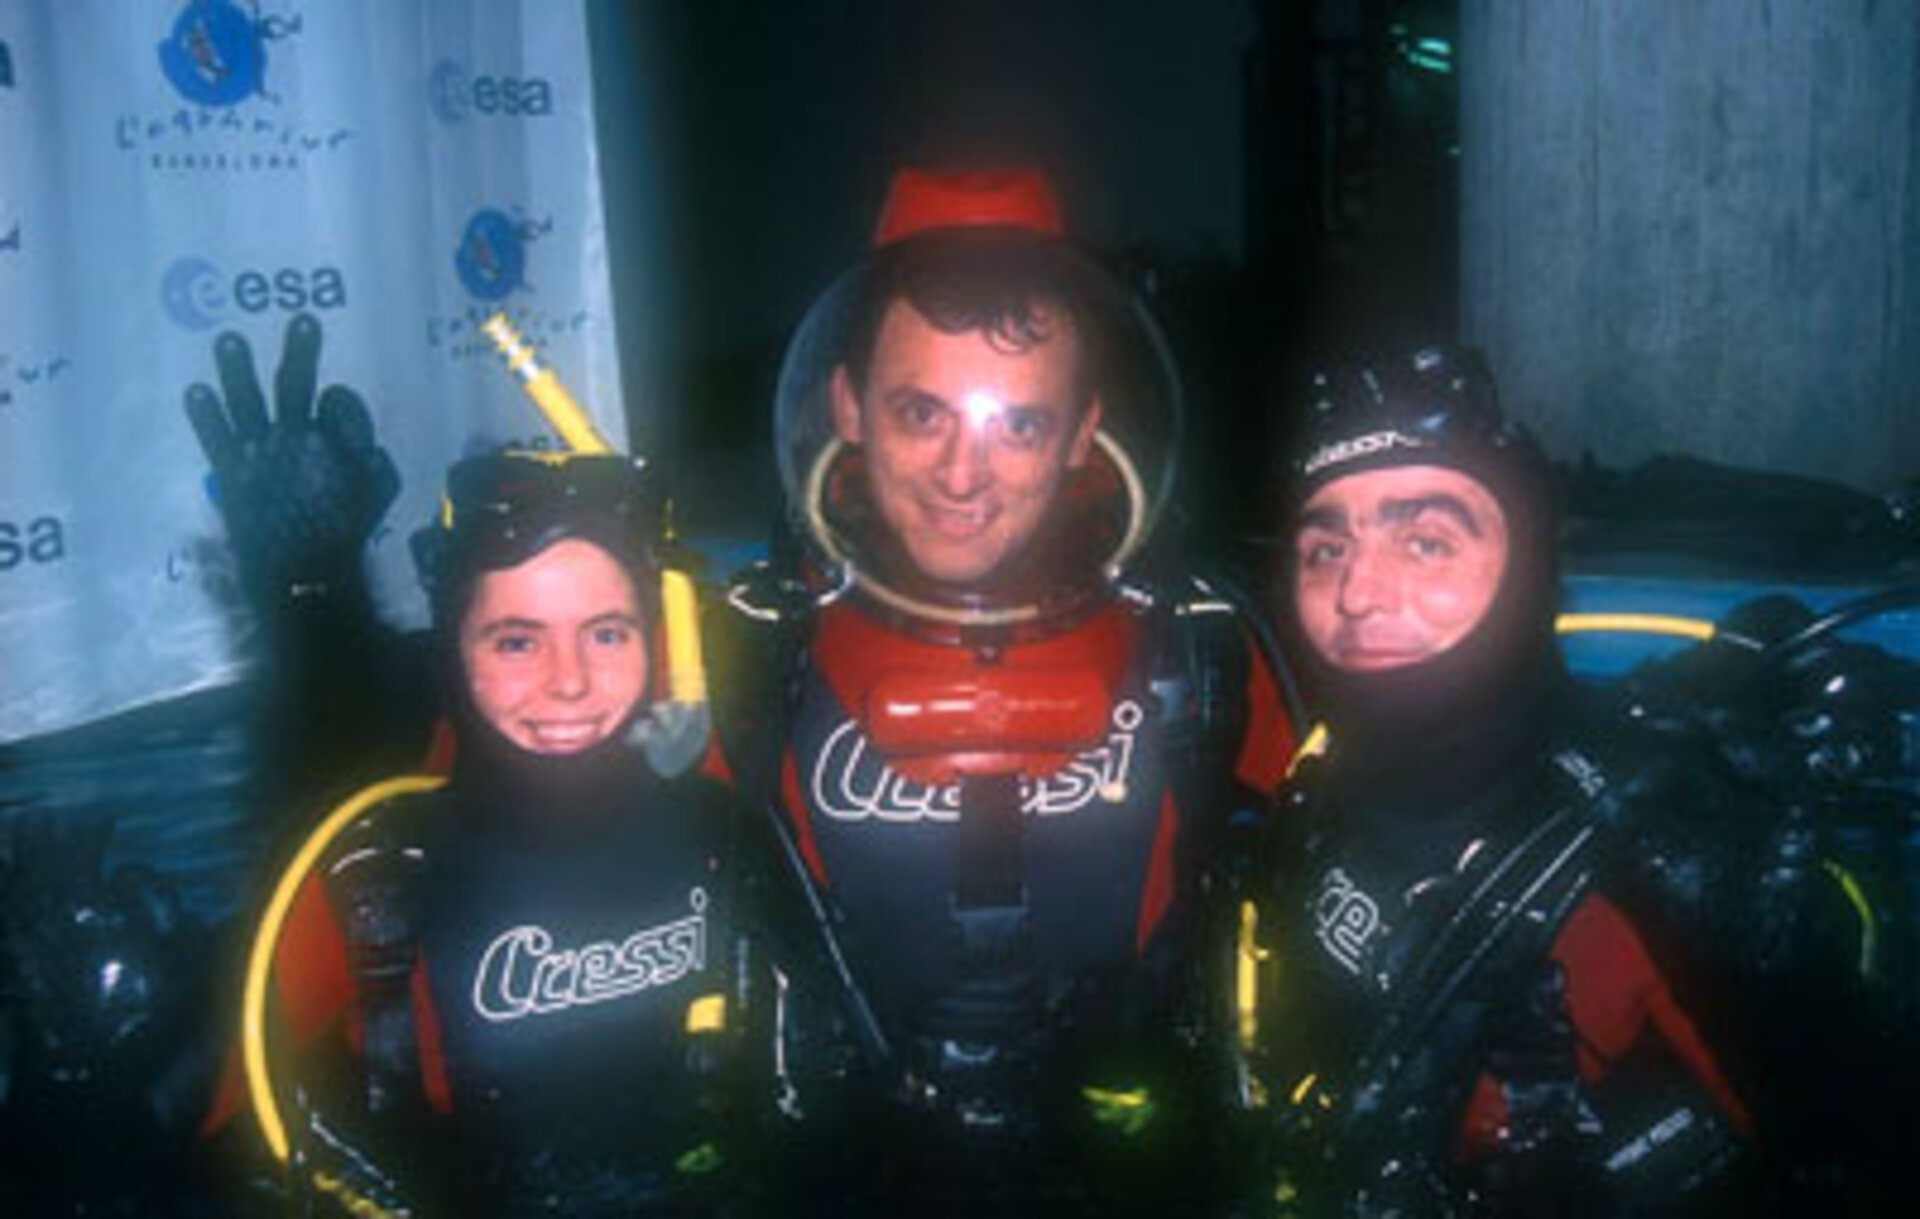 Pedro Duque, with the staff of the Aquarium, Barcelona